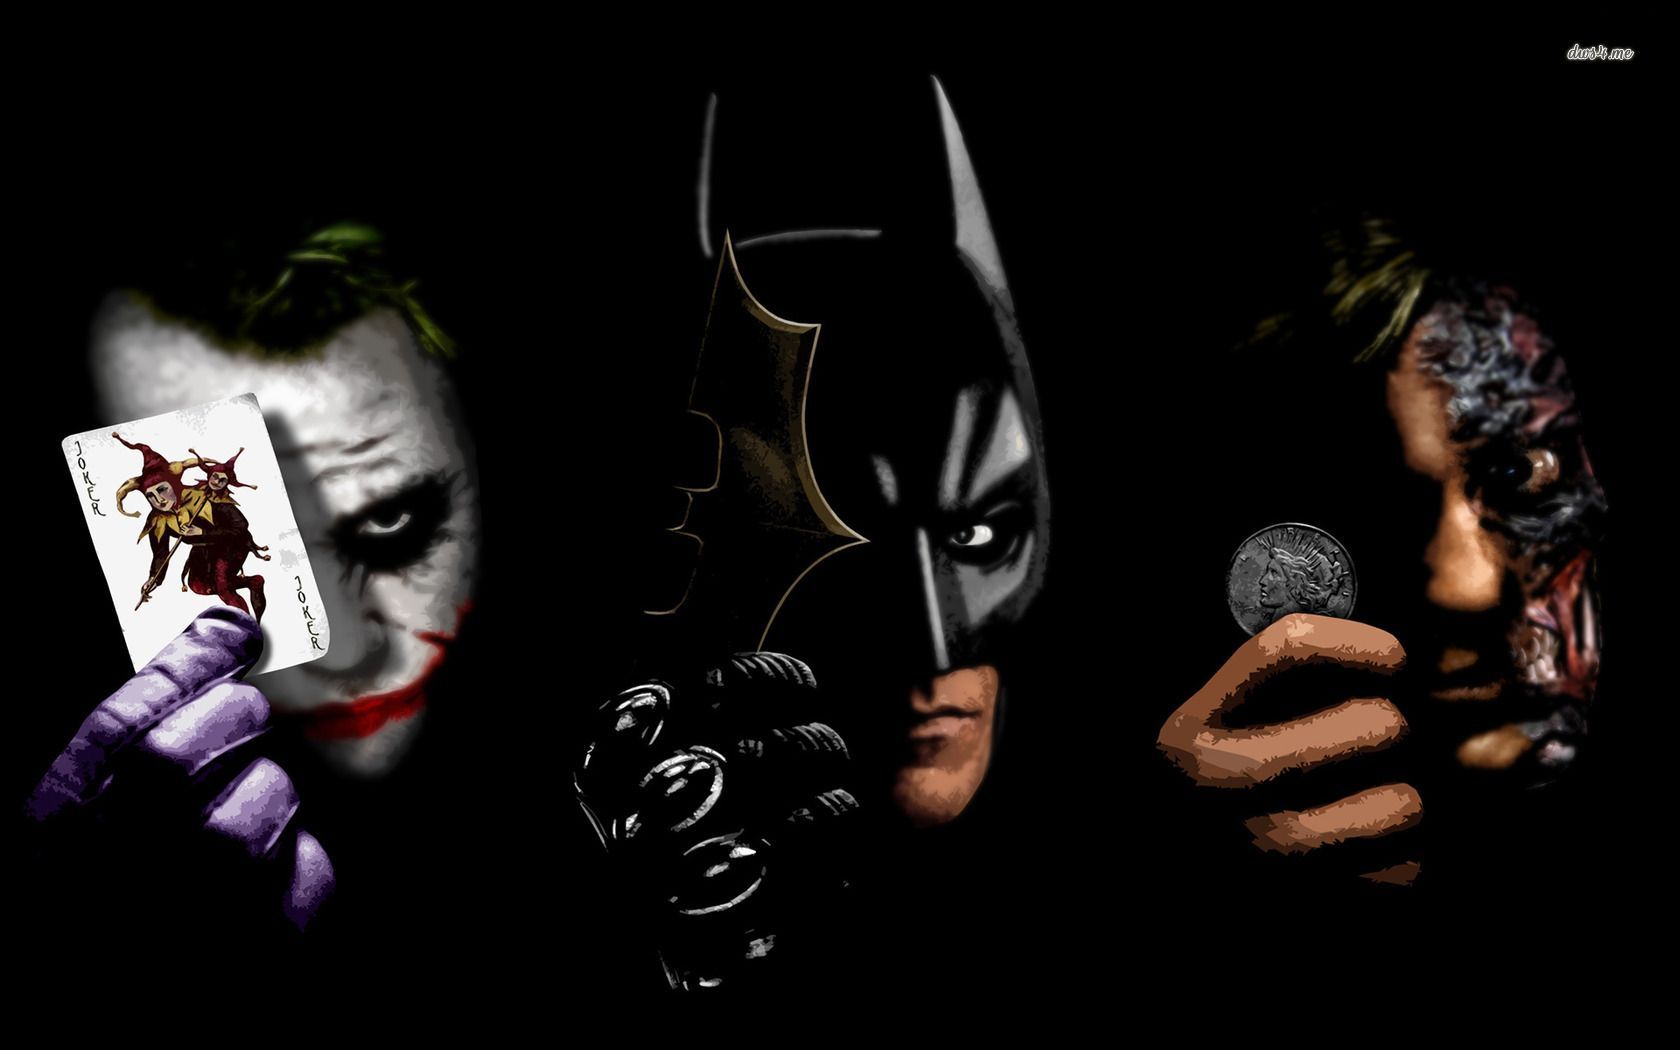  download Memes For Batman And Joker Wallpaper 1920x1080 1680x1050